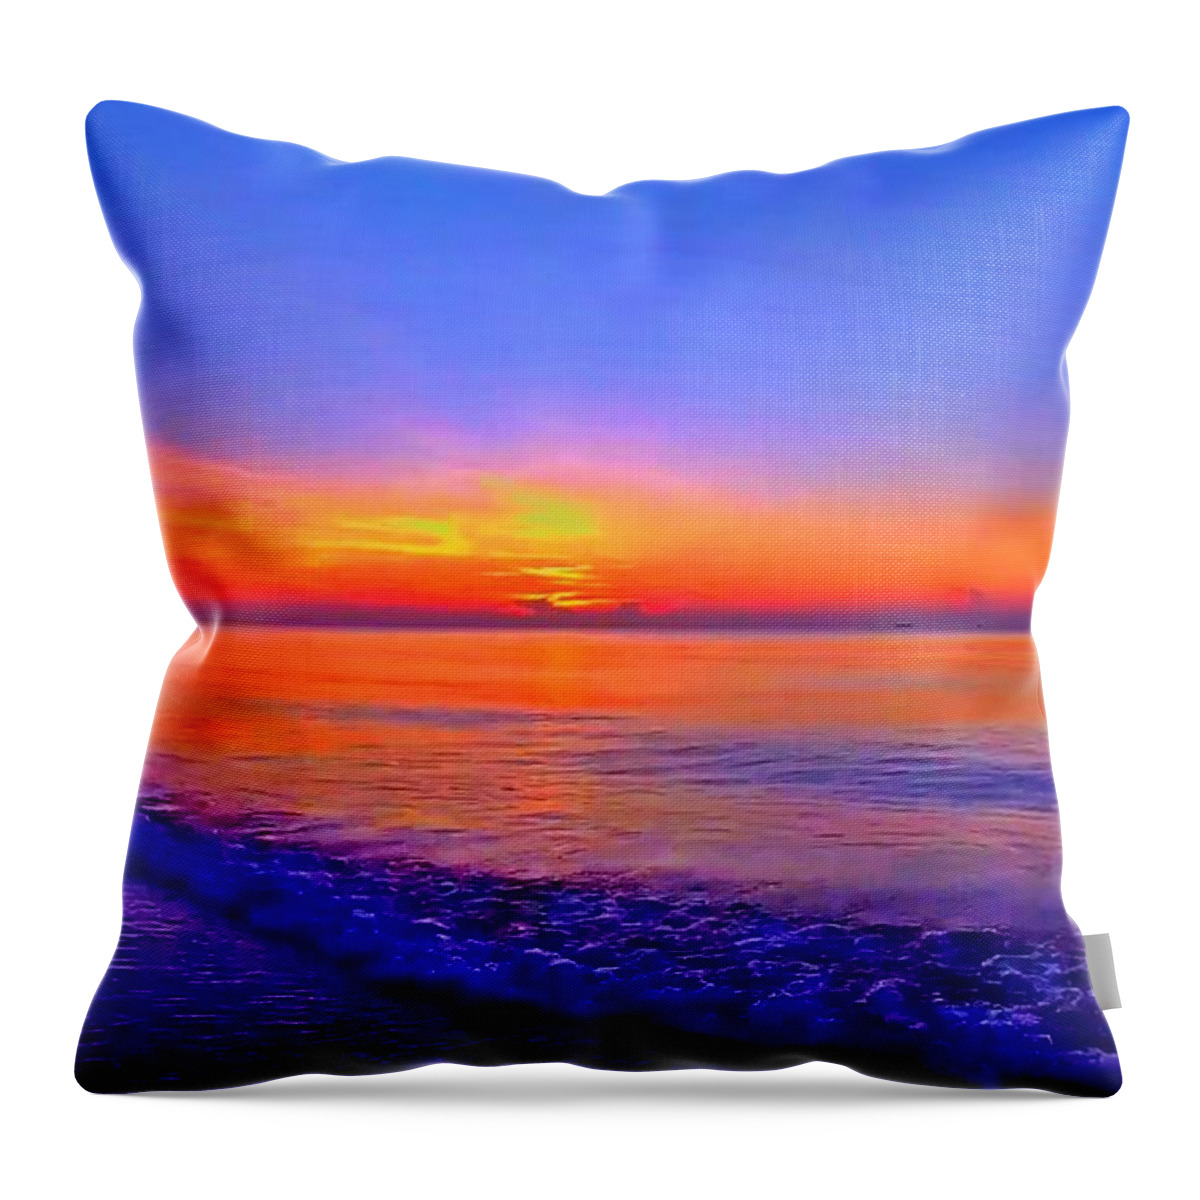 Sunrise Throw Pillow featuring the photograph Sunrise Beach 43 by Rip Read